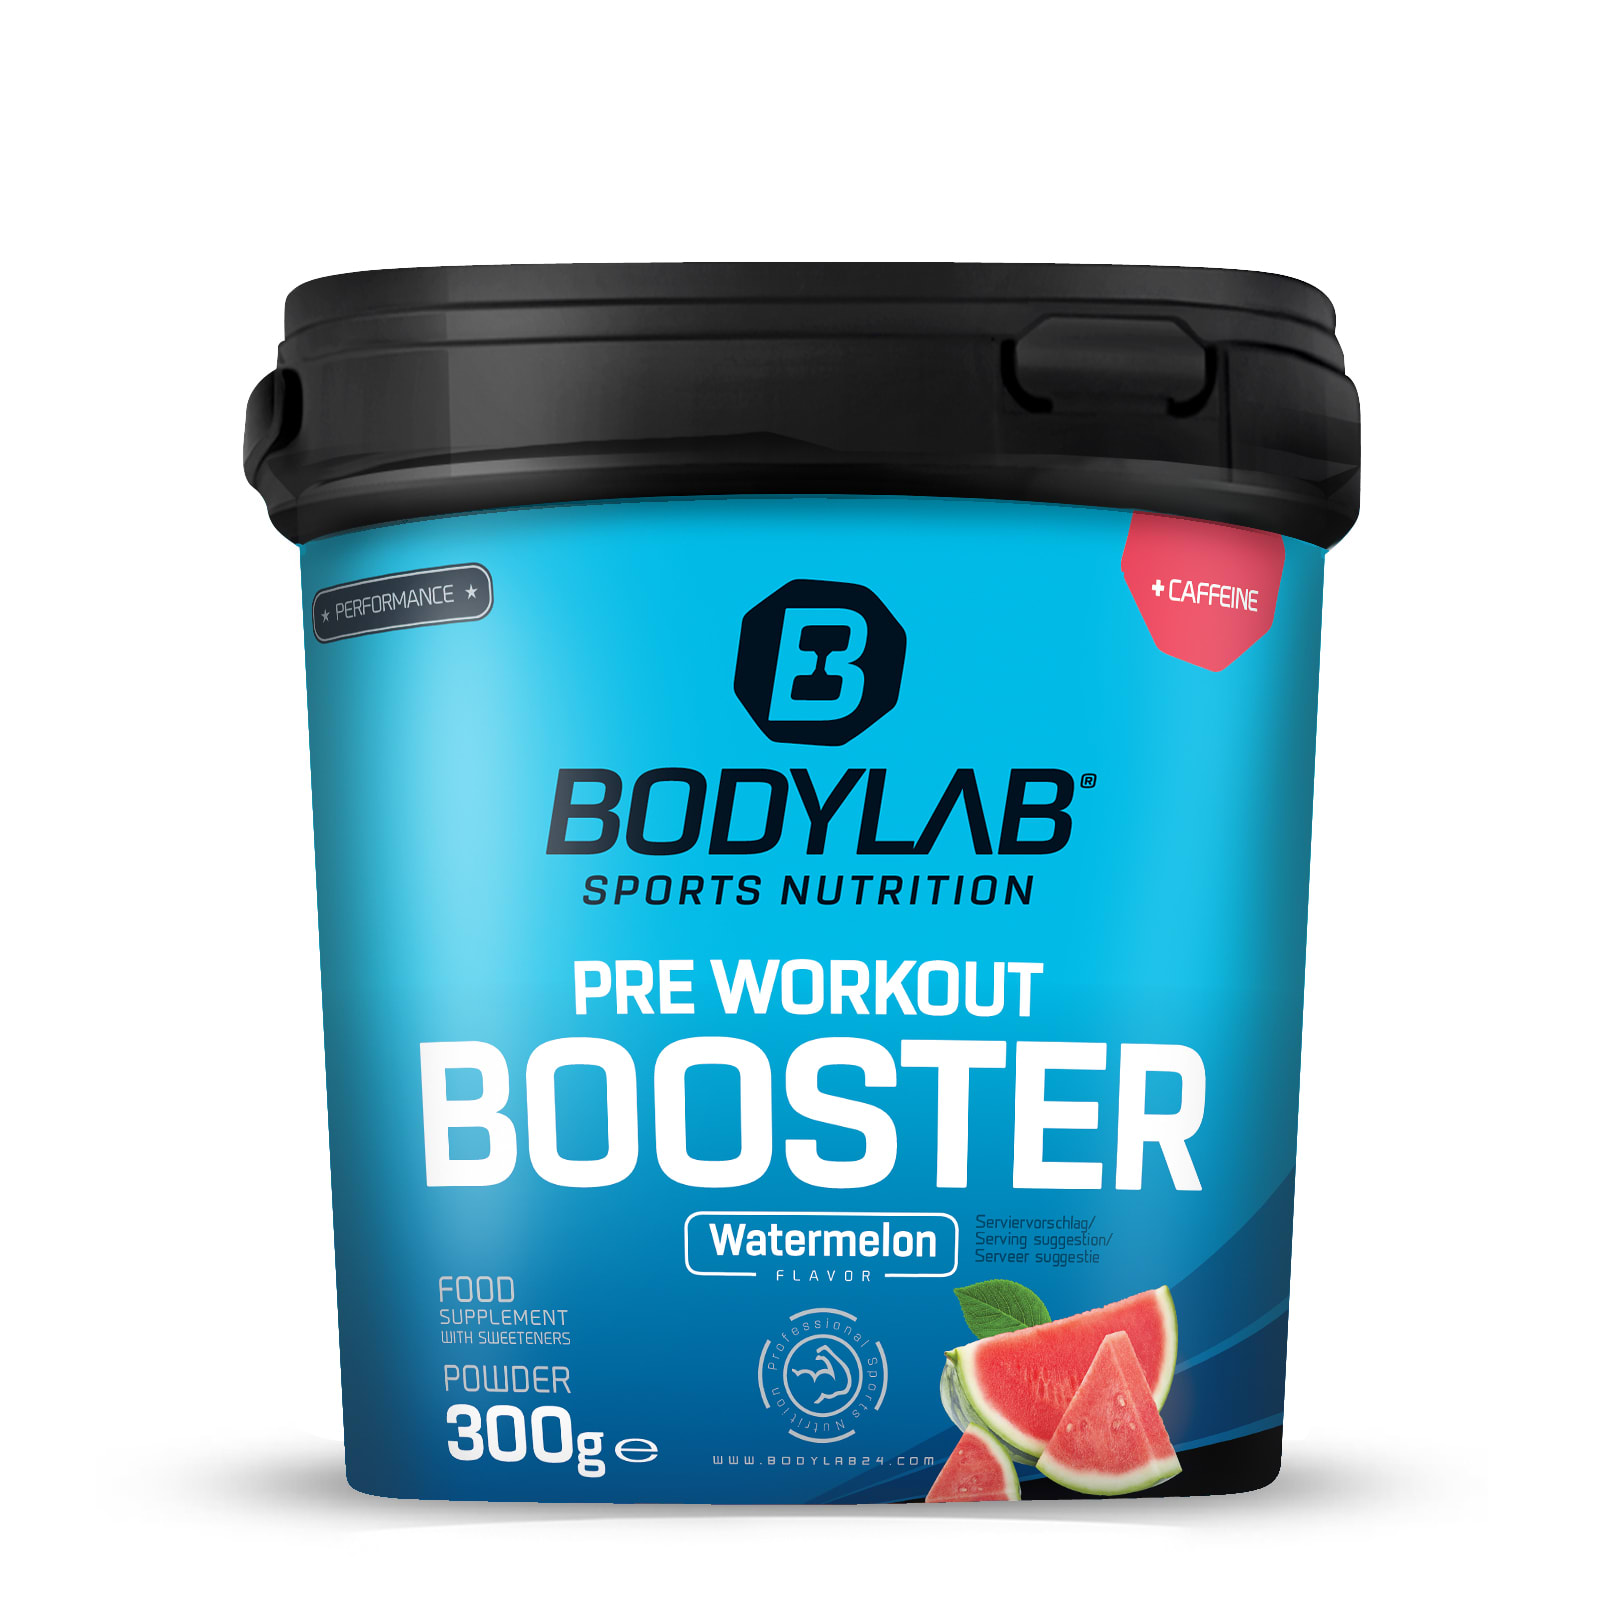 houding toonhoogte oosten Pre Workout Booster (300g) van Bodylab24 kopen | Bodylab Shop